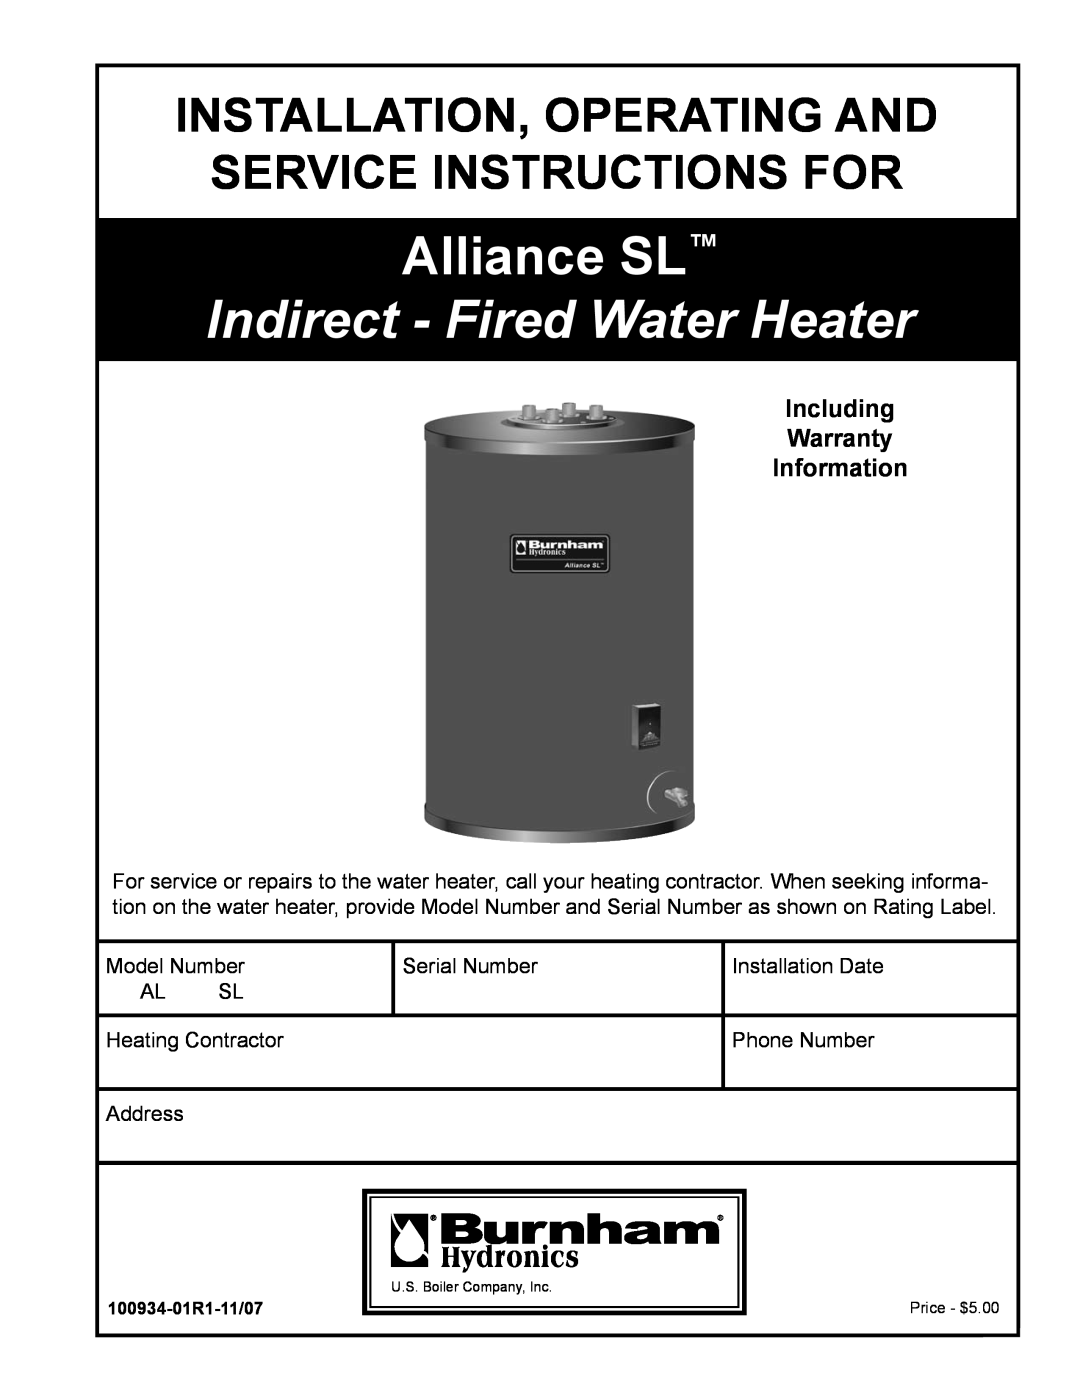 Burnham AL SL warranty Including Warranty Information, Alliance SL, Indirect - Fired Water Heater 